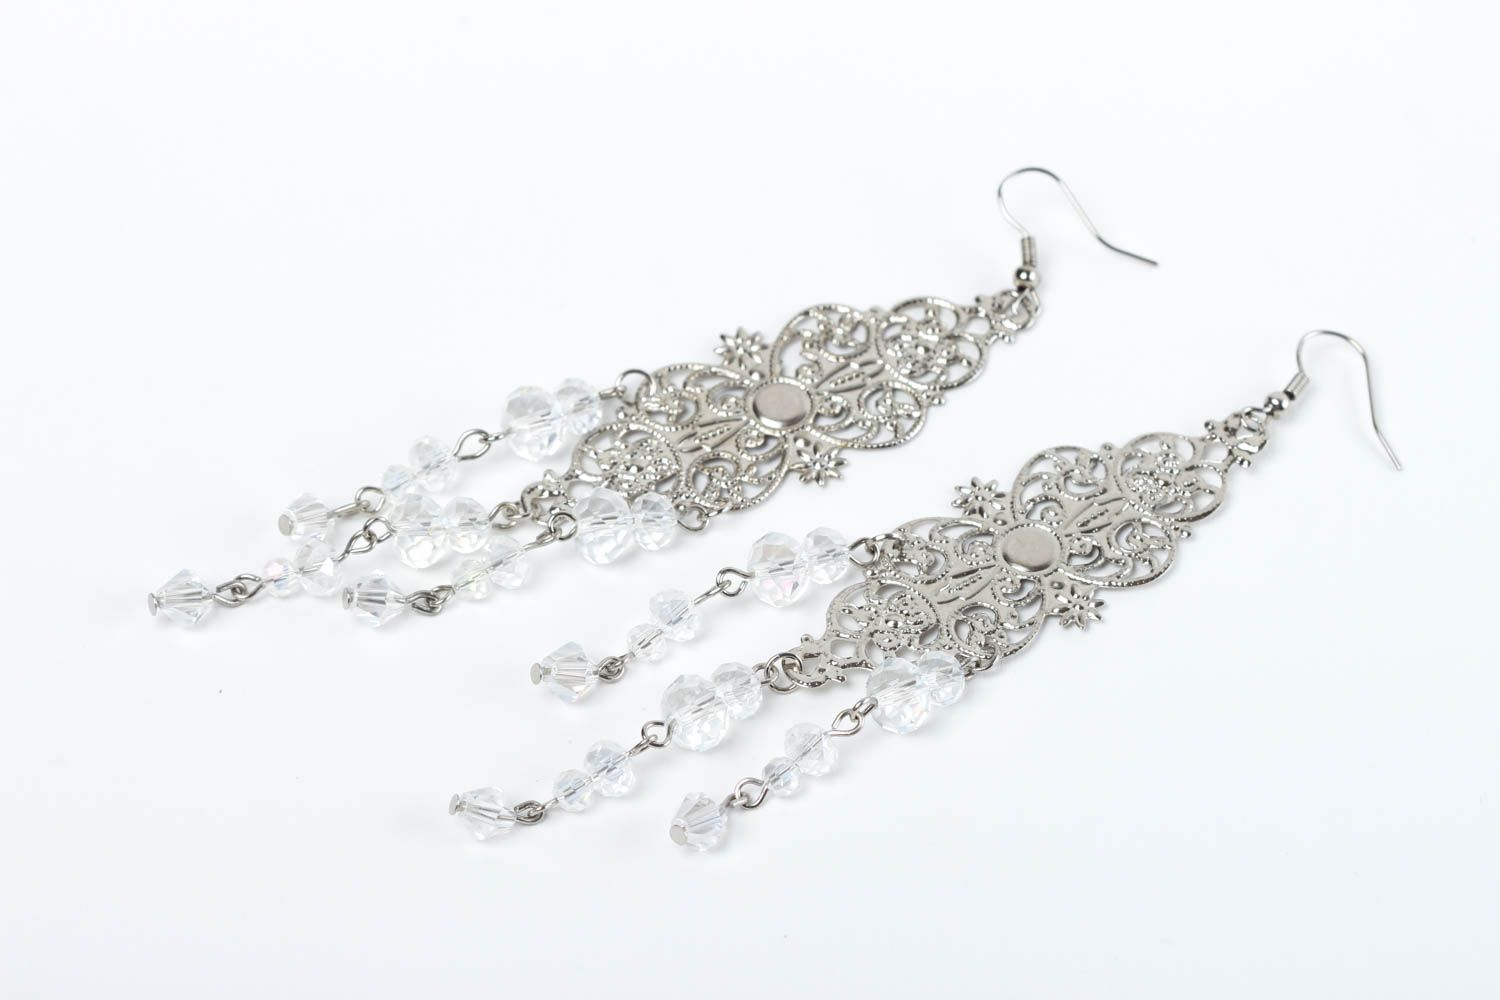 Handmade earrings designer earrings unusual gift crystal accessory gift for her photo 2